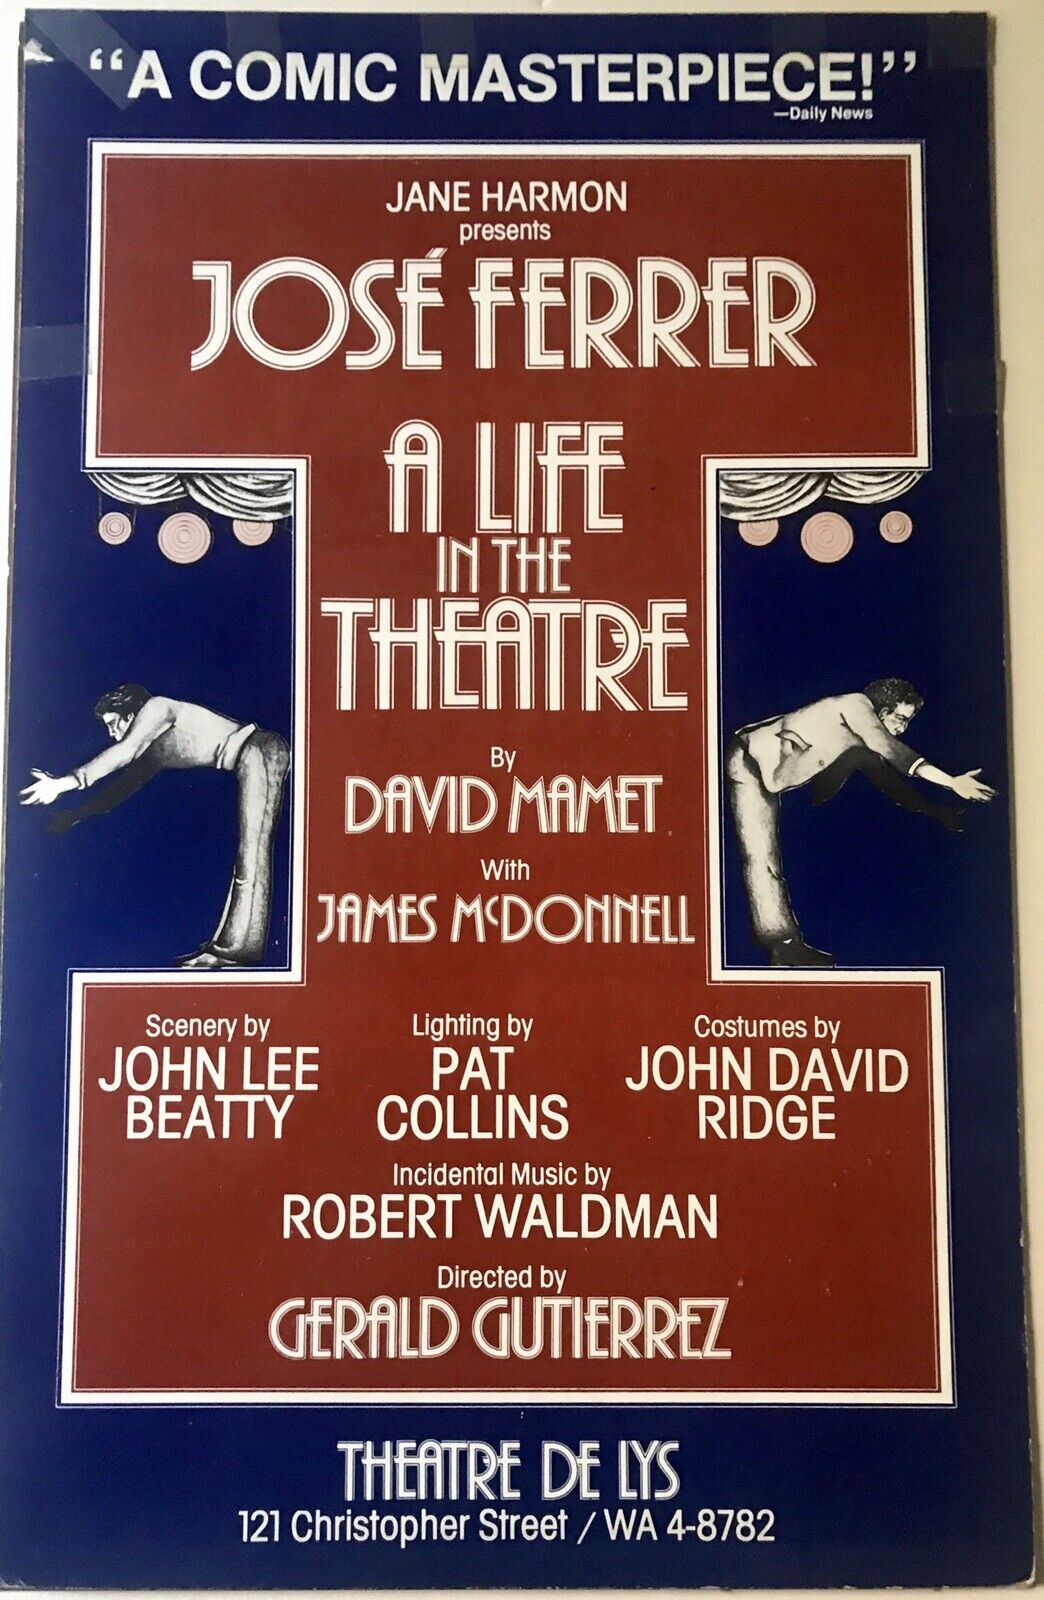 A Life In The Theatre Dallas Mall David Ferrer free Mamet Broadway Off 1977 José